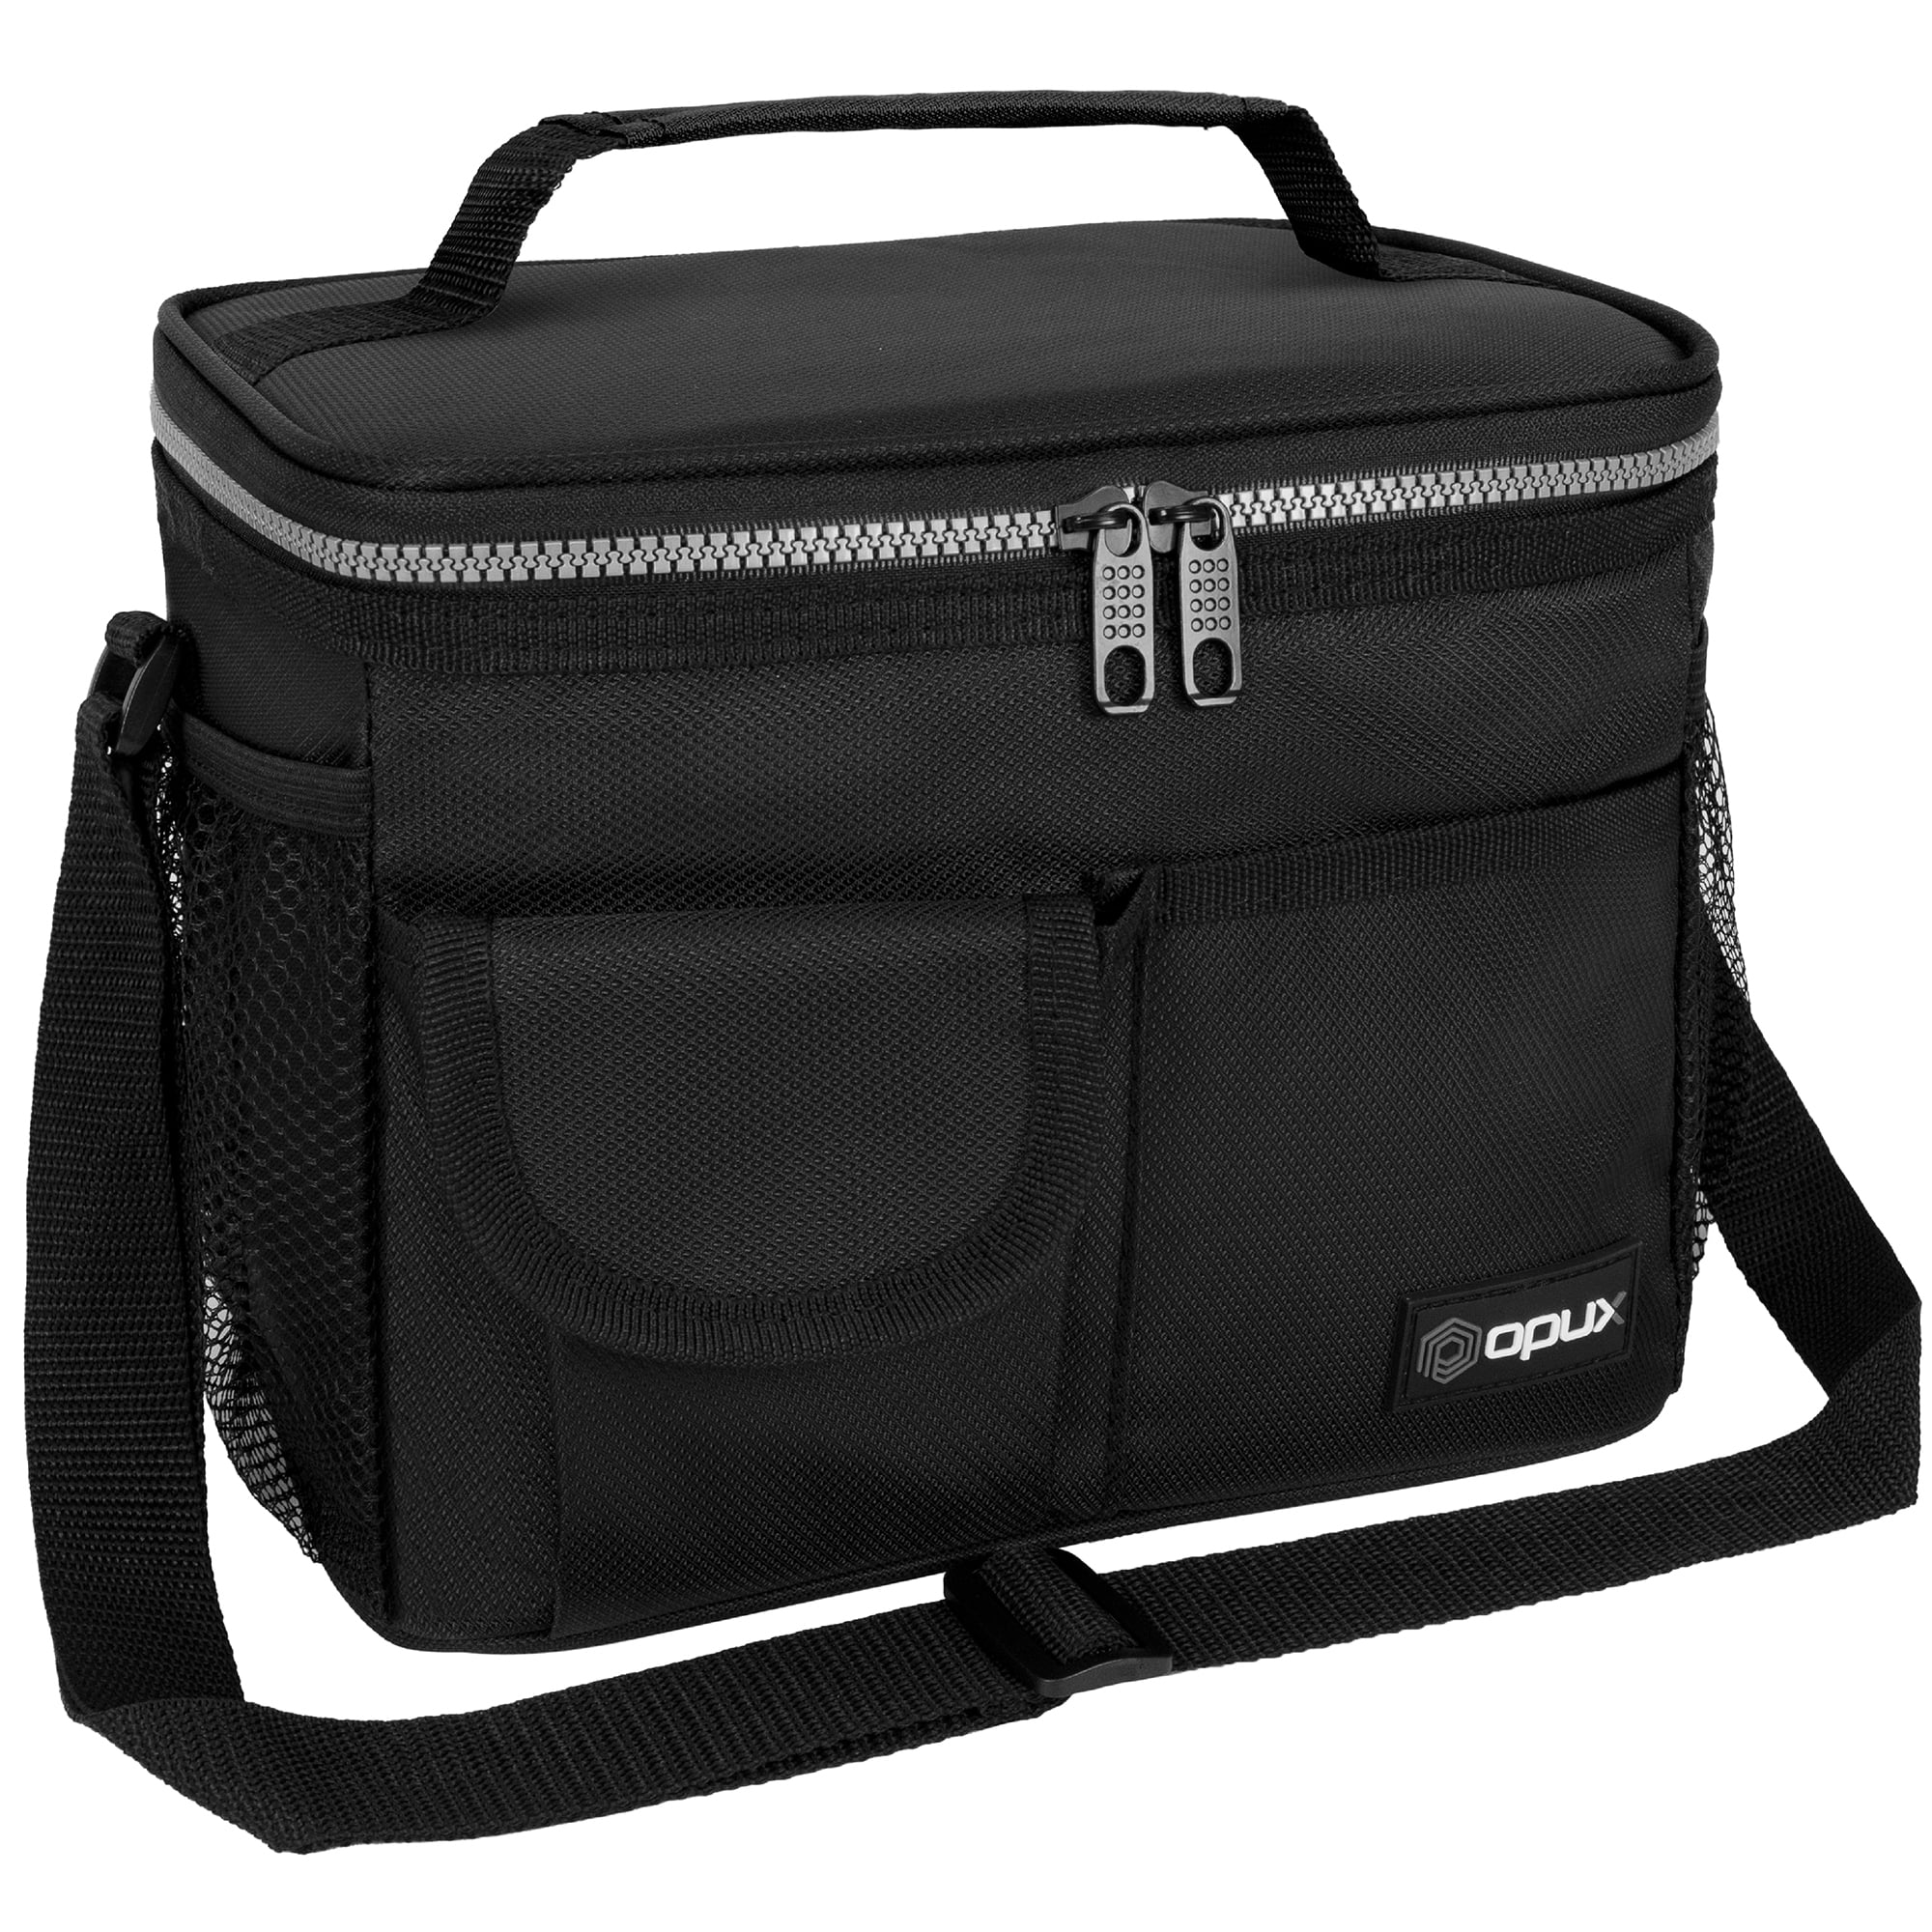 Black Trim 24 Can Soft Side Cooler Lunch bag Insulated Shoulder Strap New Gray 